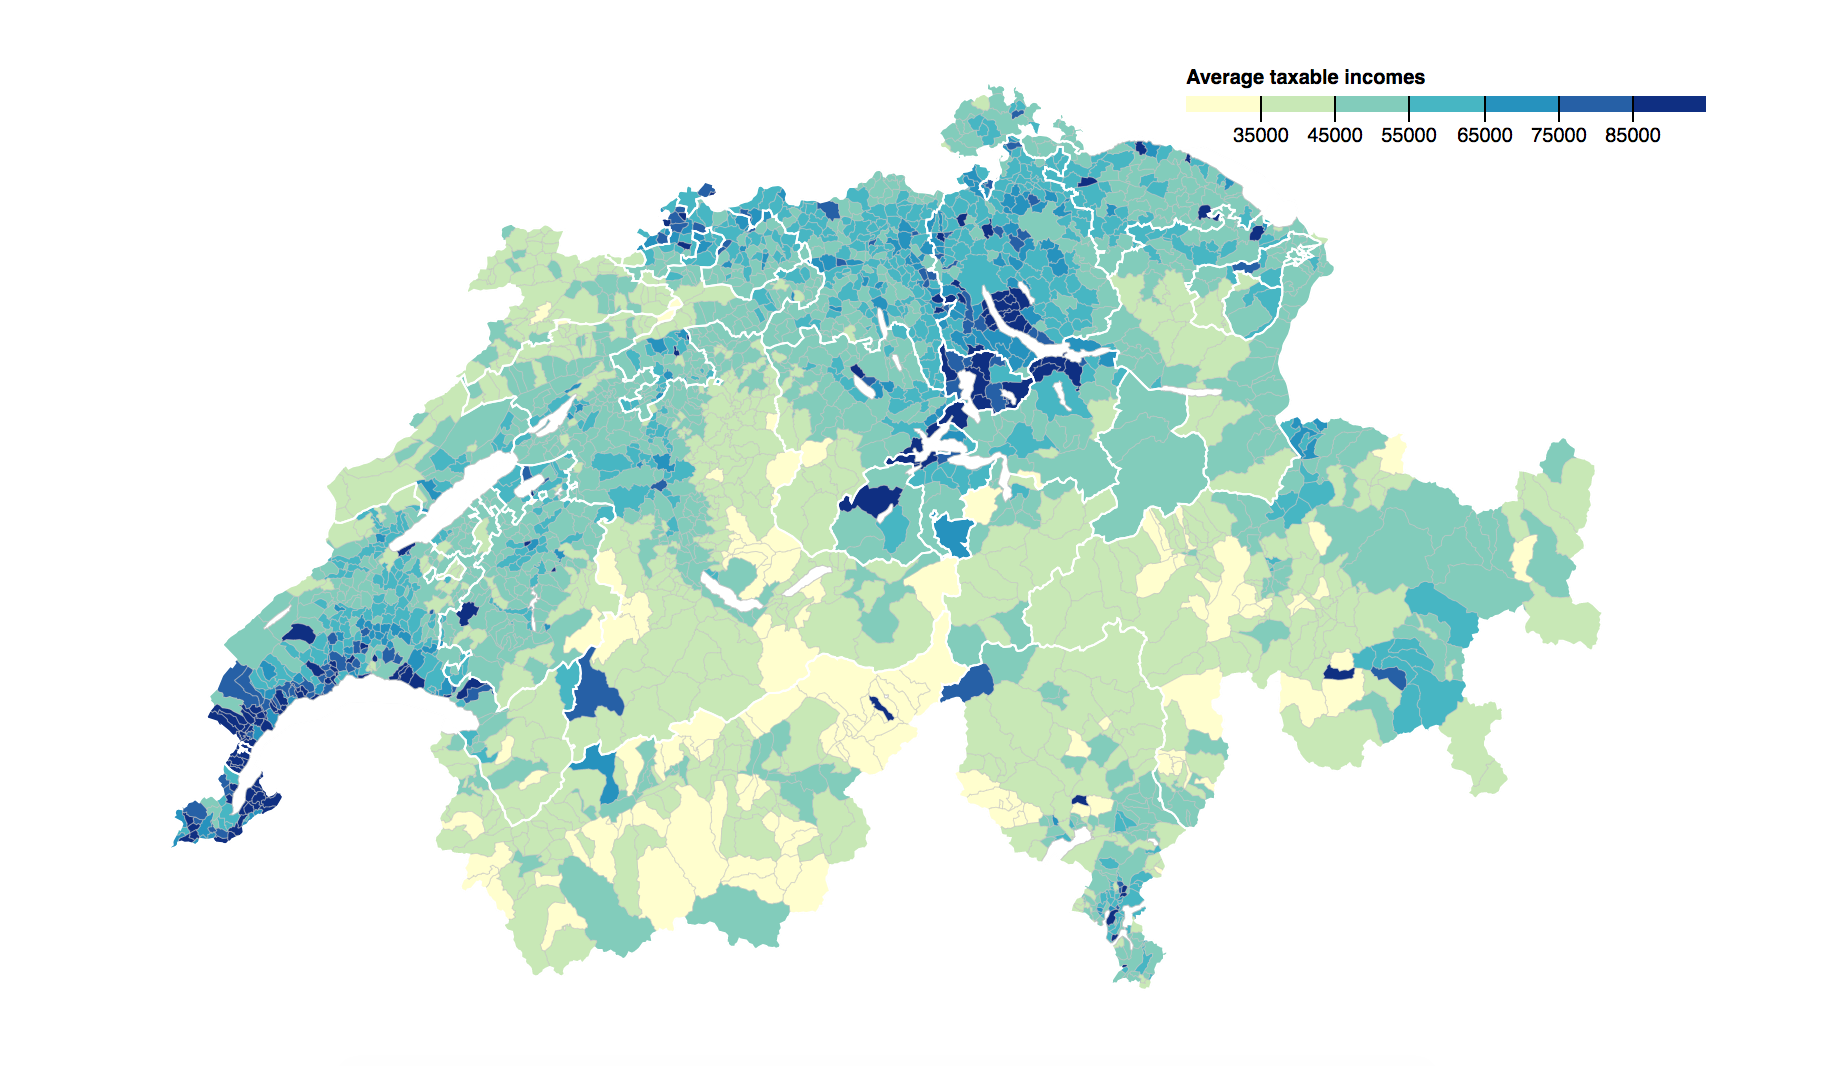 Inequality and poverty in Switzerland